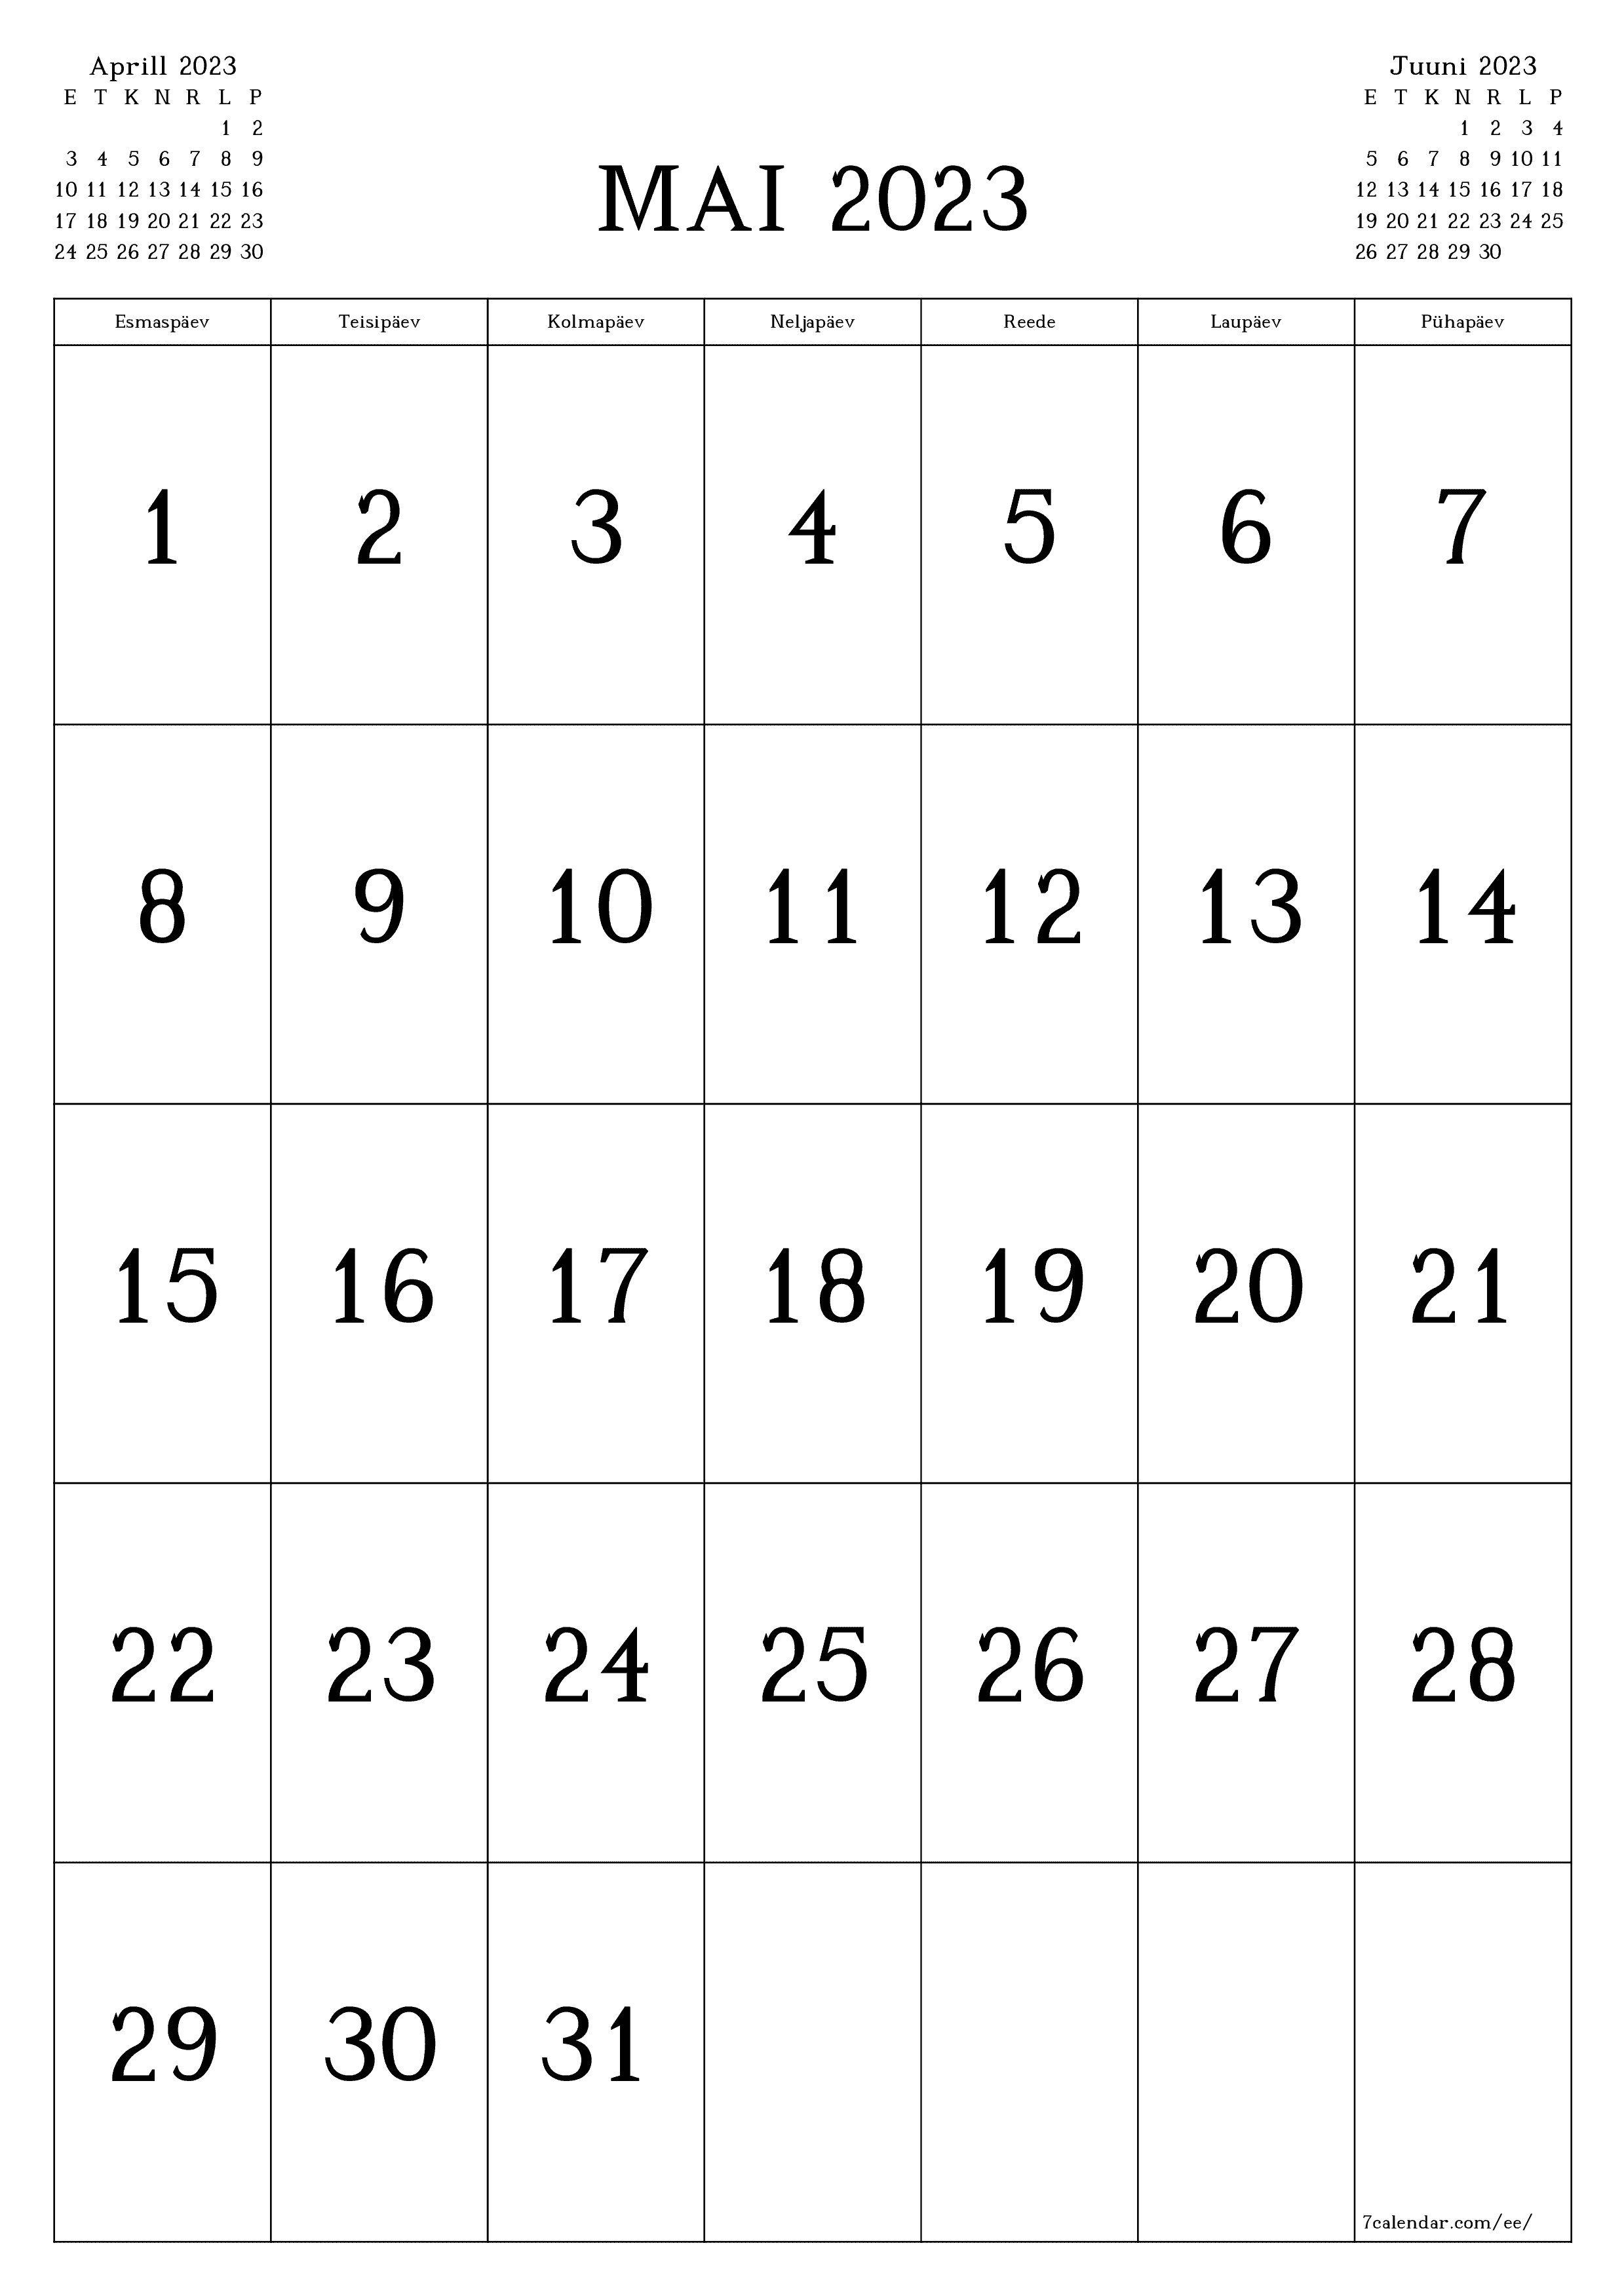 prinditav seina kalendri mall tasuta vertikaalne Igakuine kalender Mai (Mai) 2023